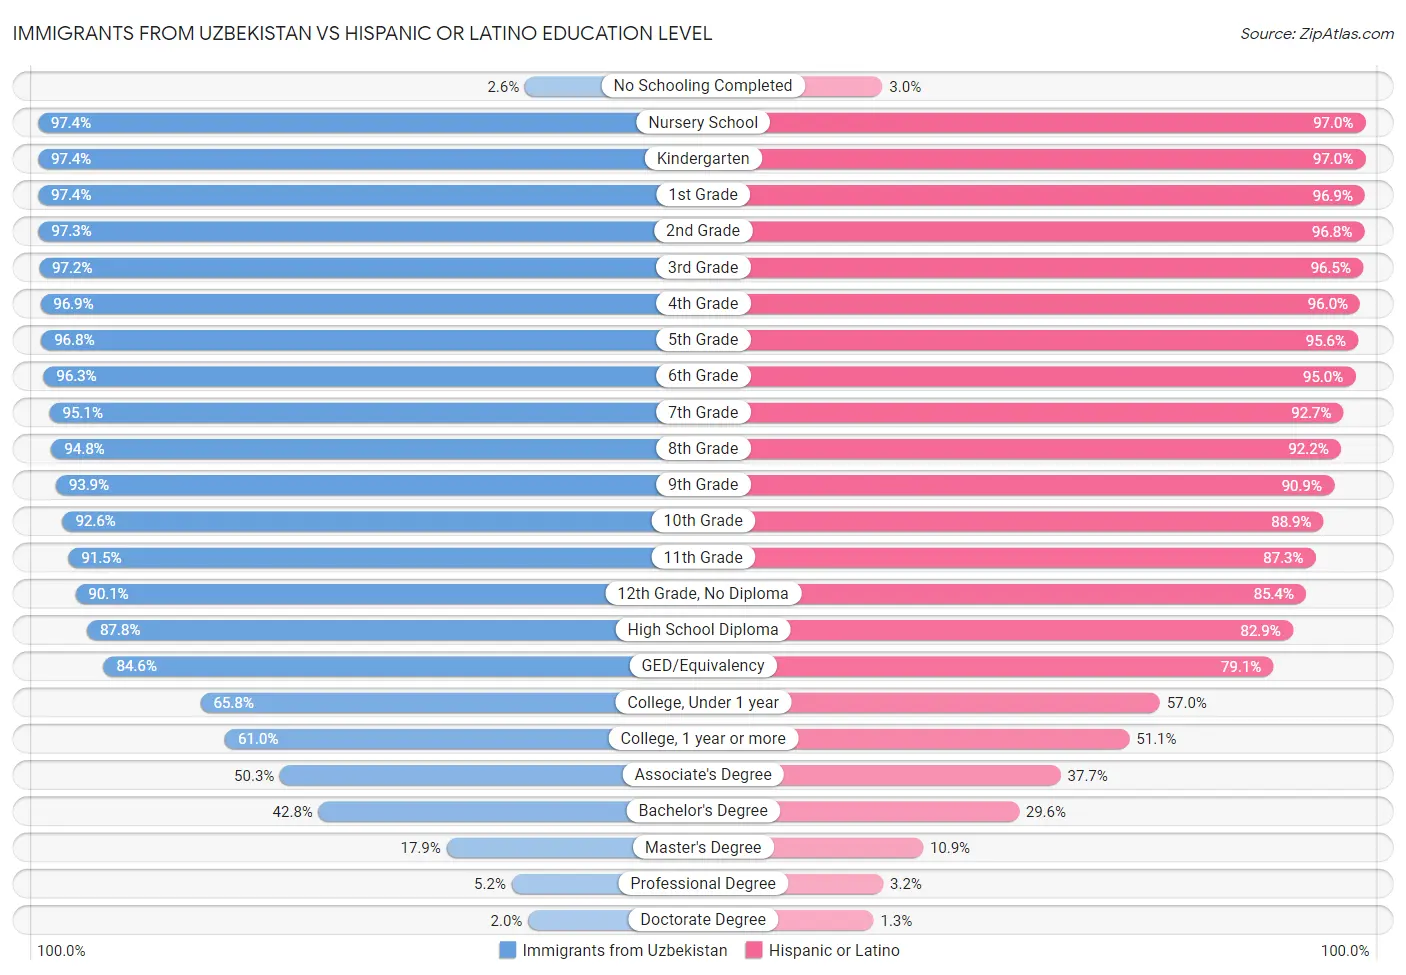 Immigrants from Uzbekistan vs Hispanic or Latino Education Level